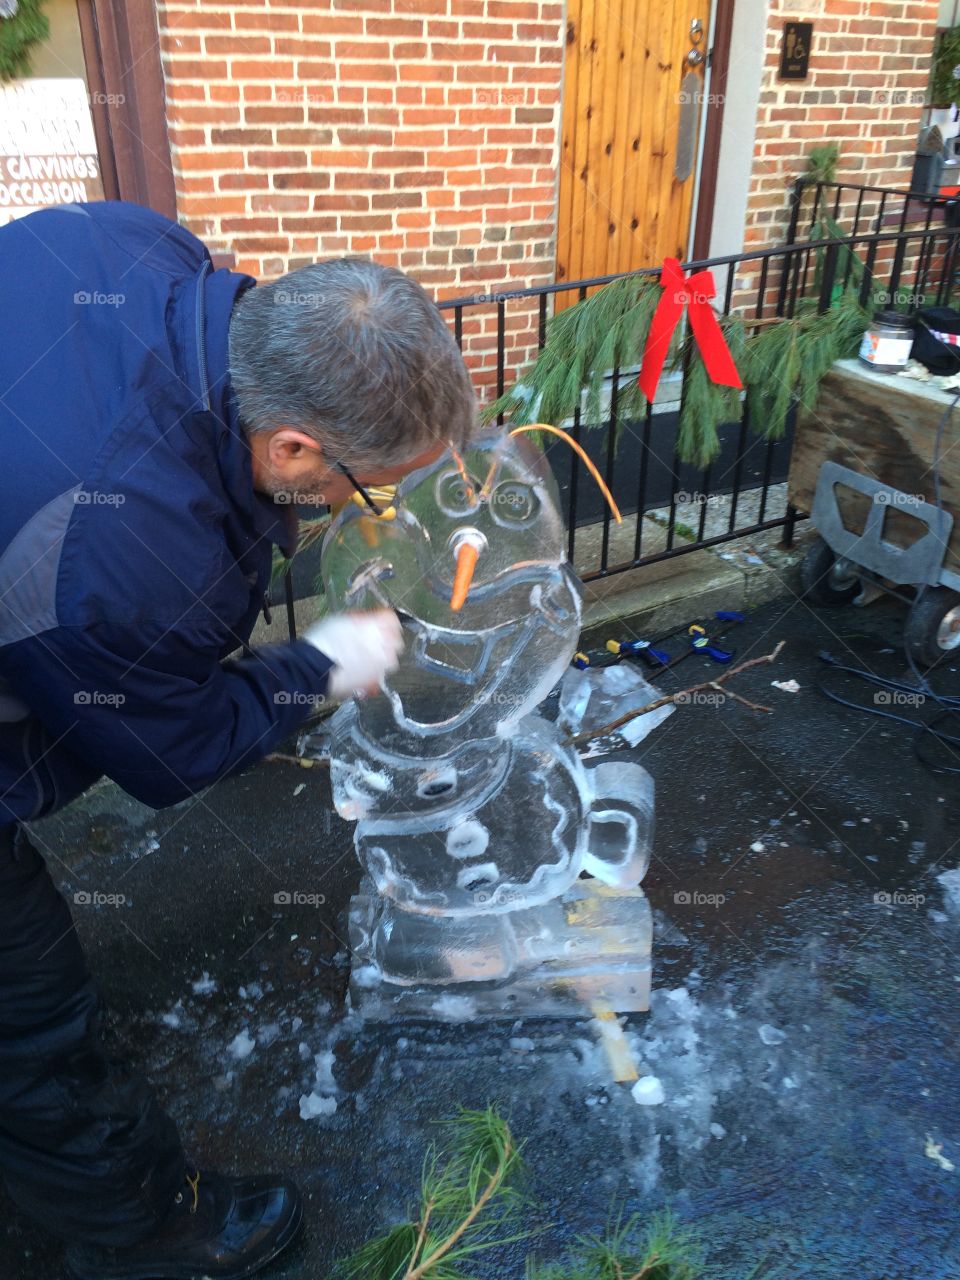 Ice sculpture making.